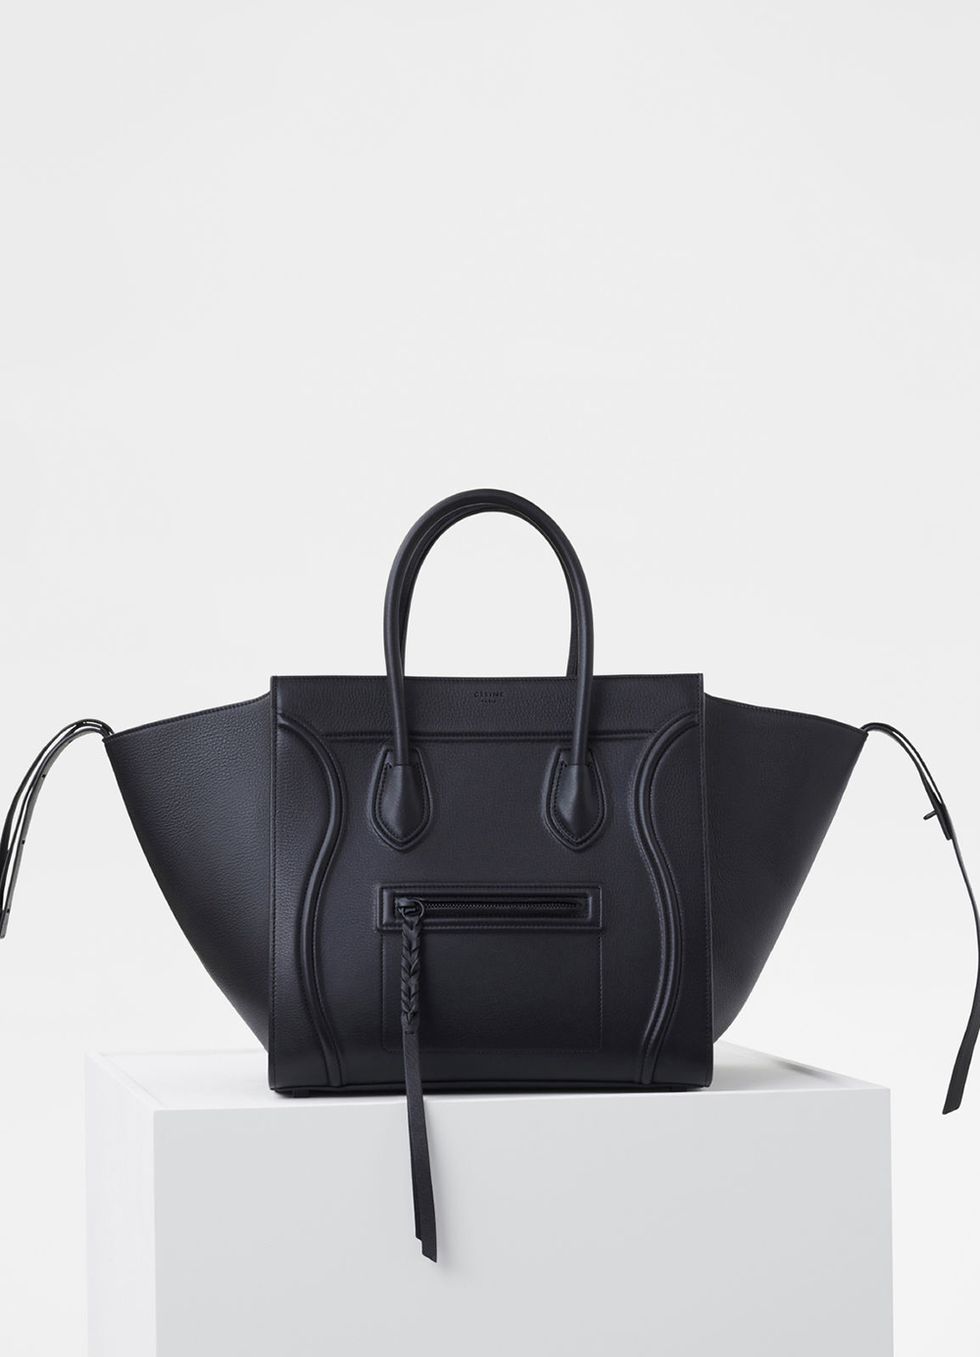 Handbag, Bag, White, Black, Product, Fashion accessory, Leather, Tote bag, Birkin bag, Luggage and bags, 